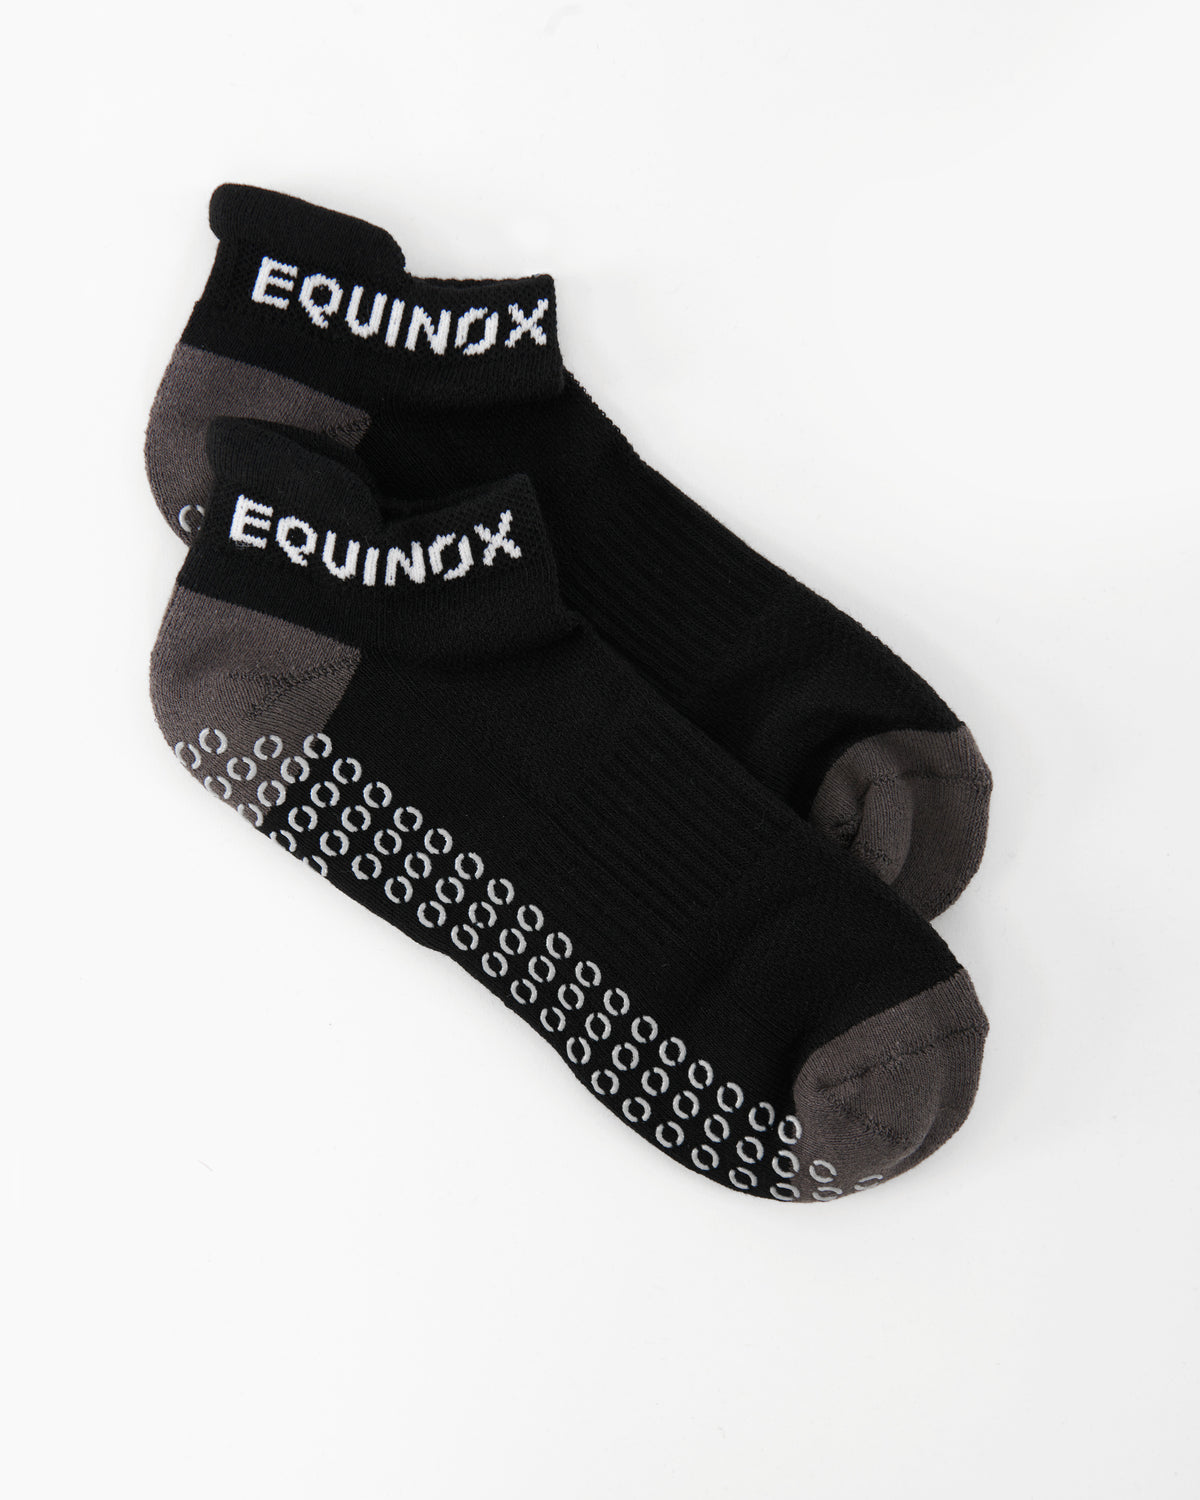 Equinox Low Cut Pilates/Barre Grip Socks